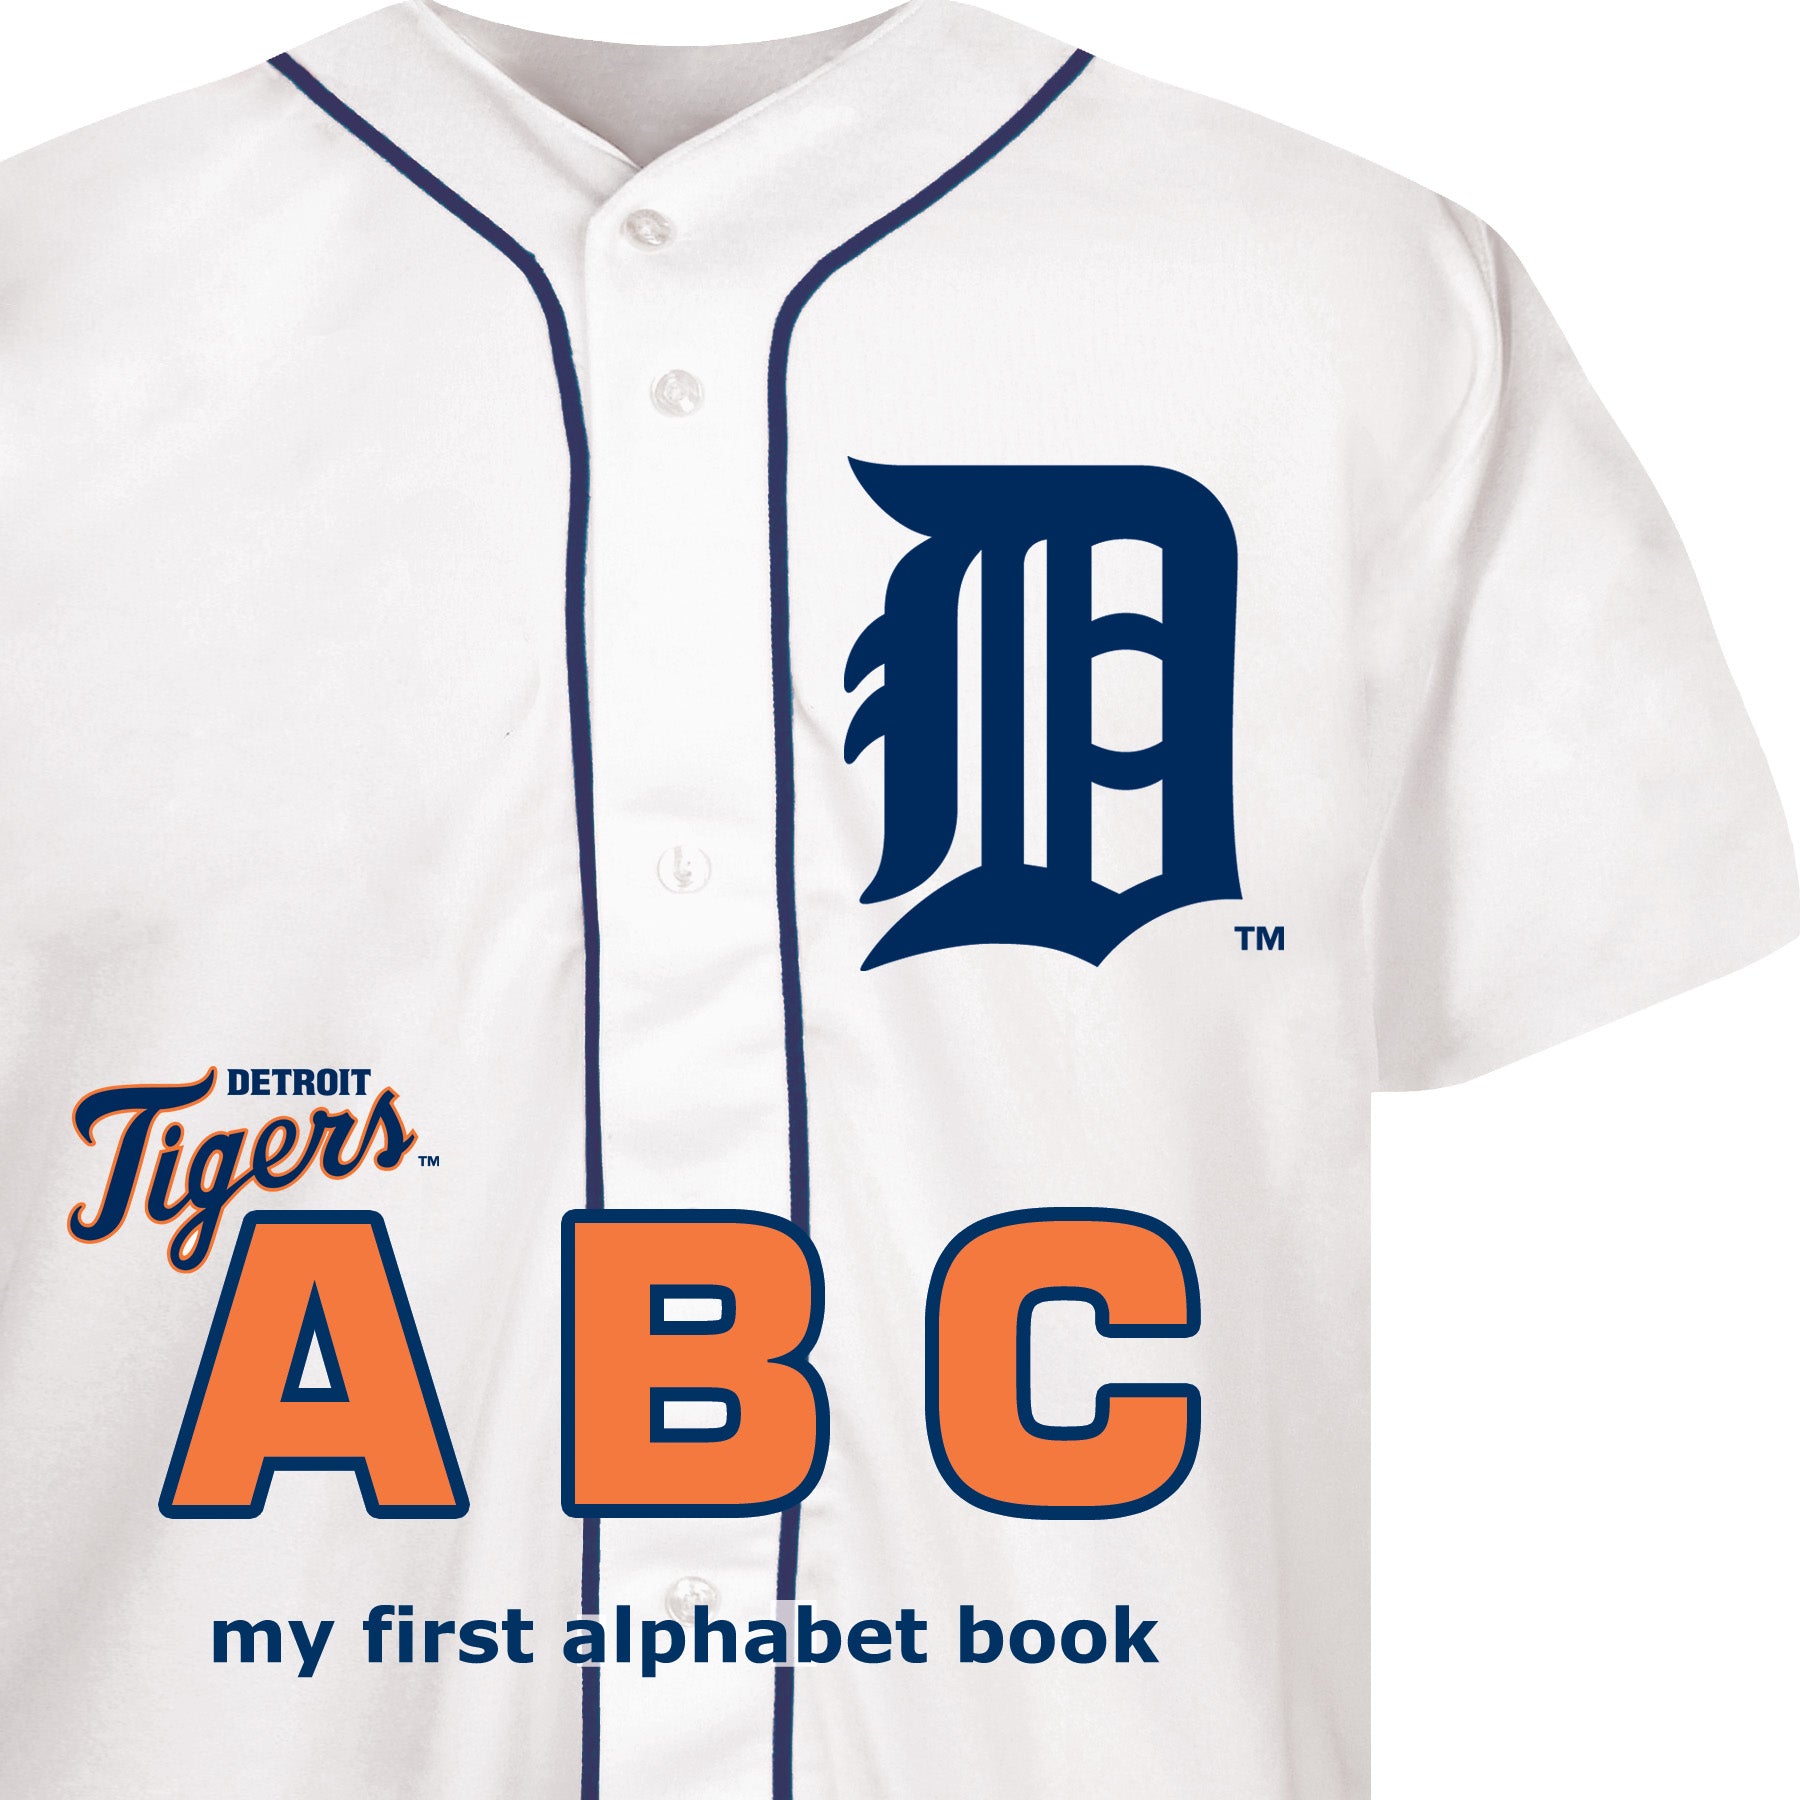 Detroit Tigers [Book]